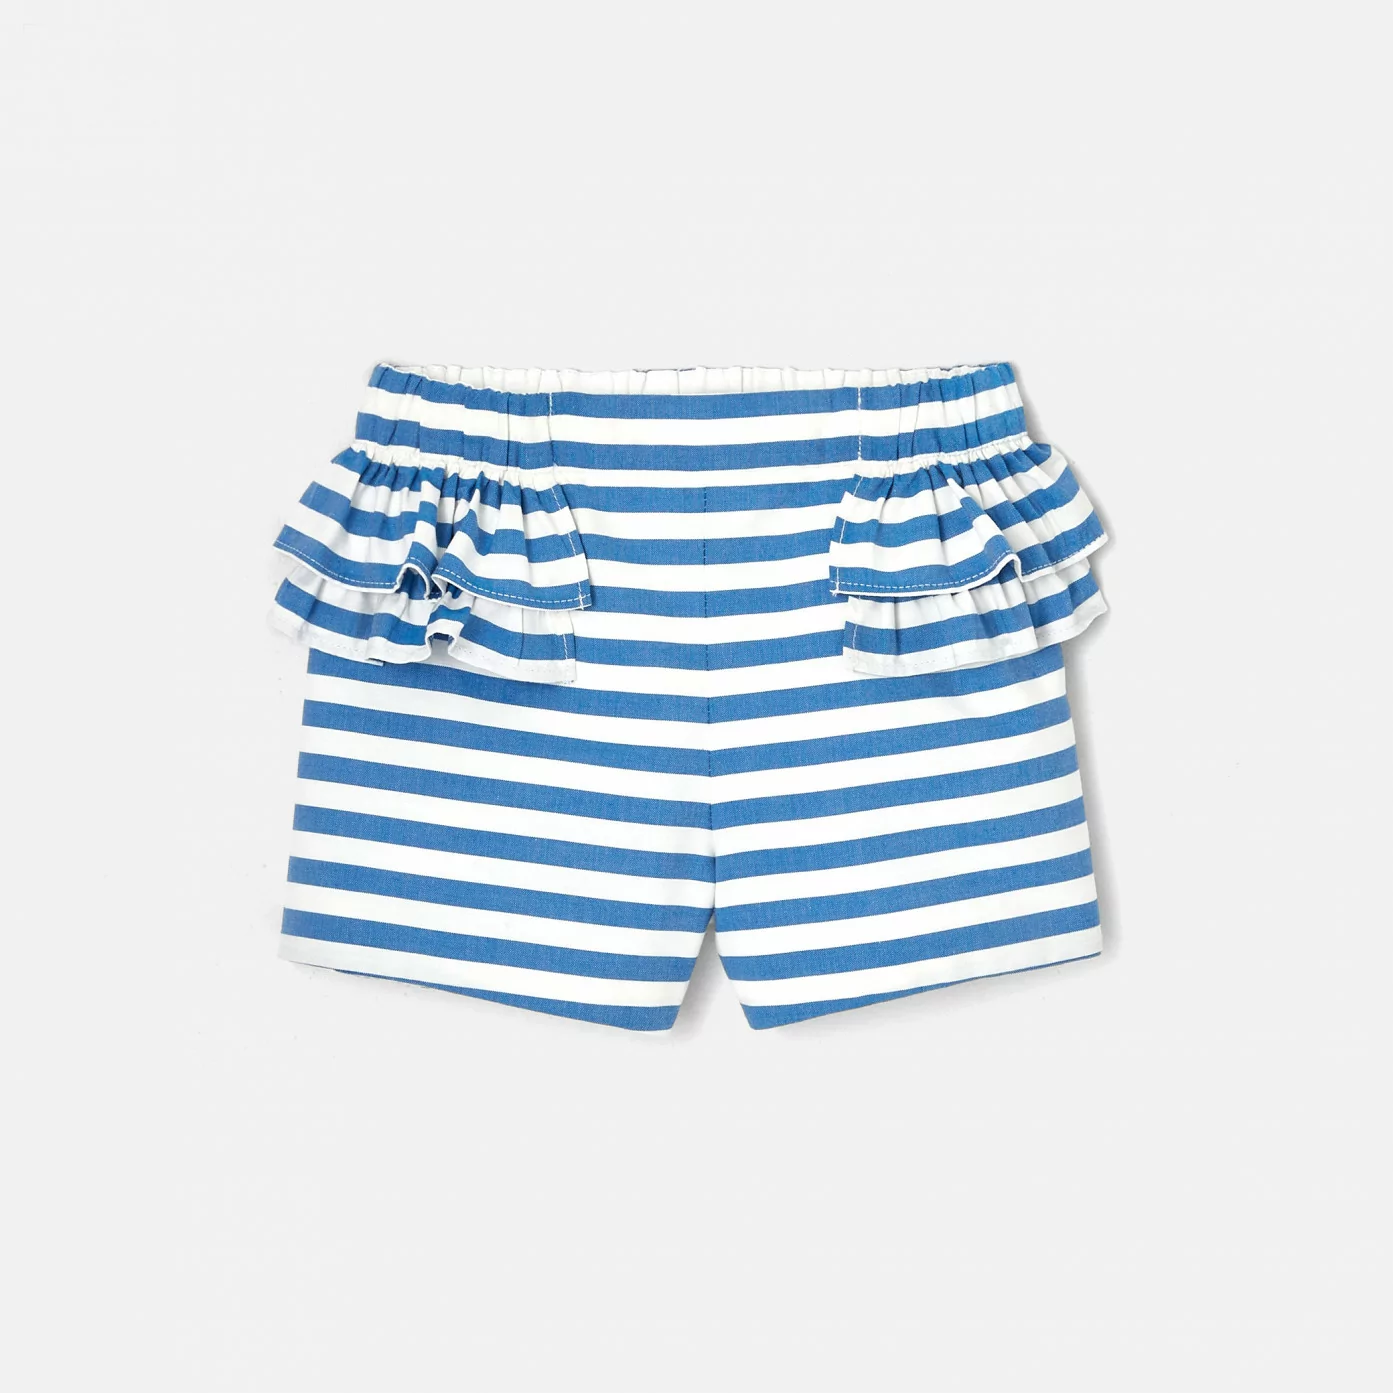 Toddler girl striped shorts